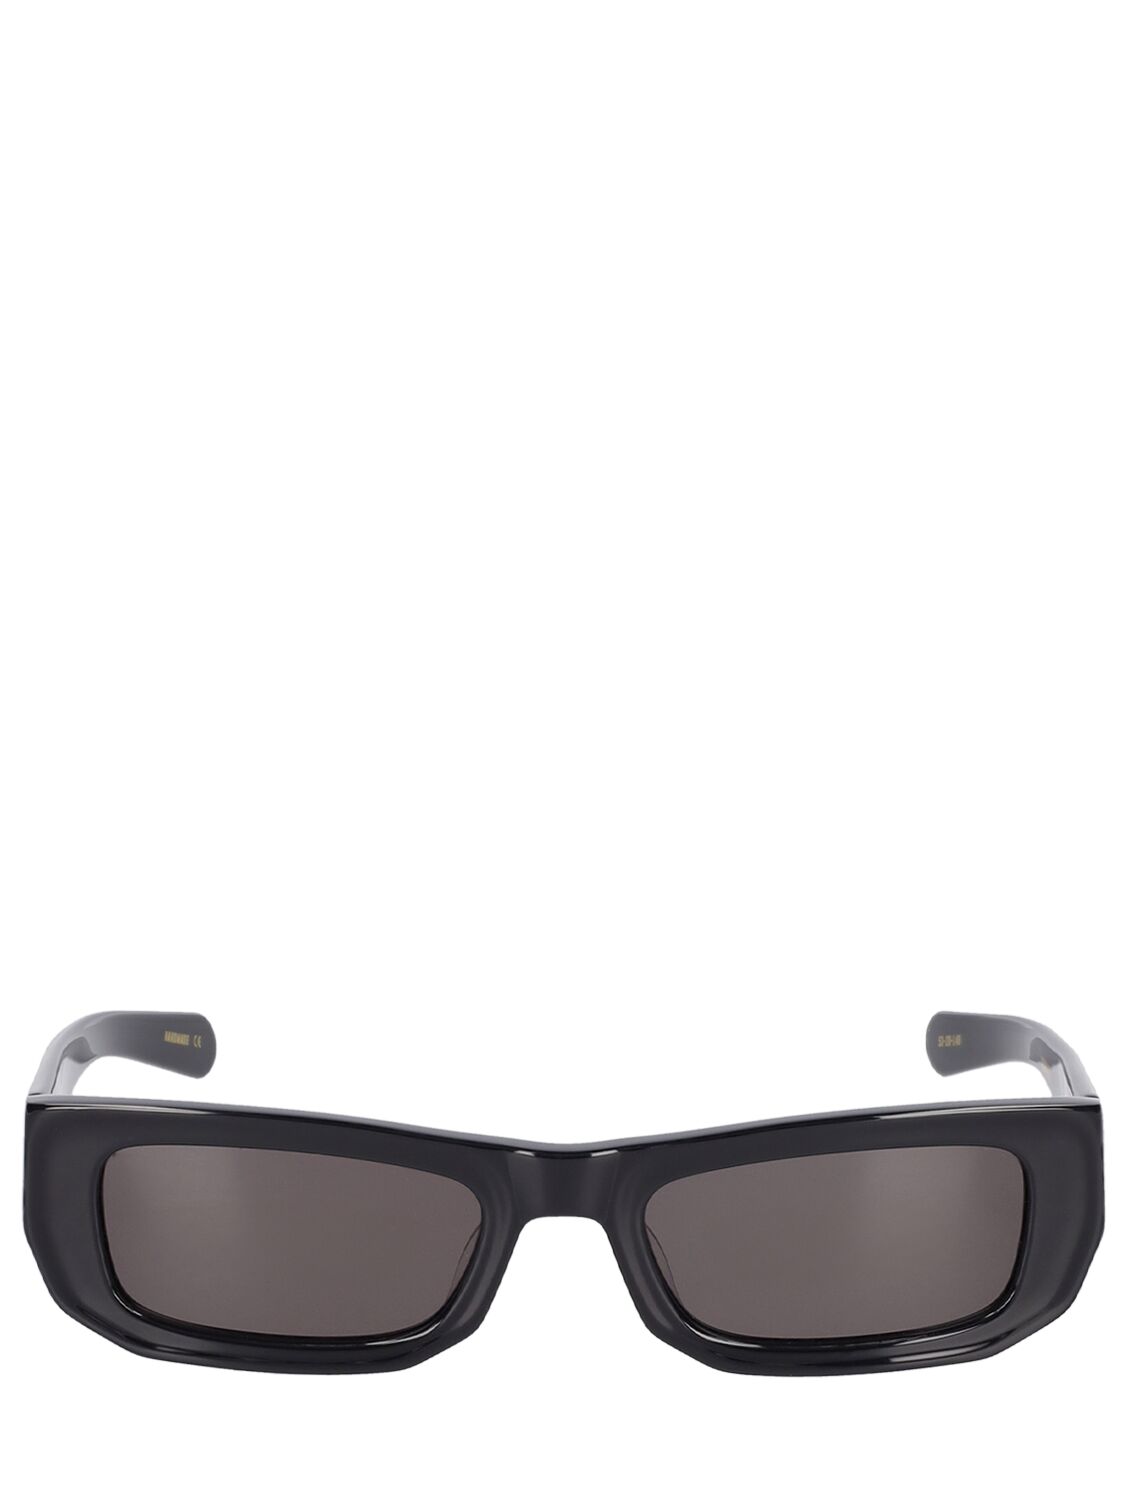 Flatlist Eyewear Bricktop Sunglasses In Black